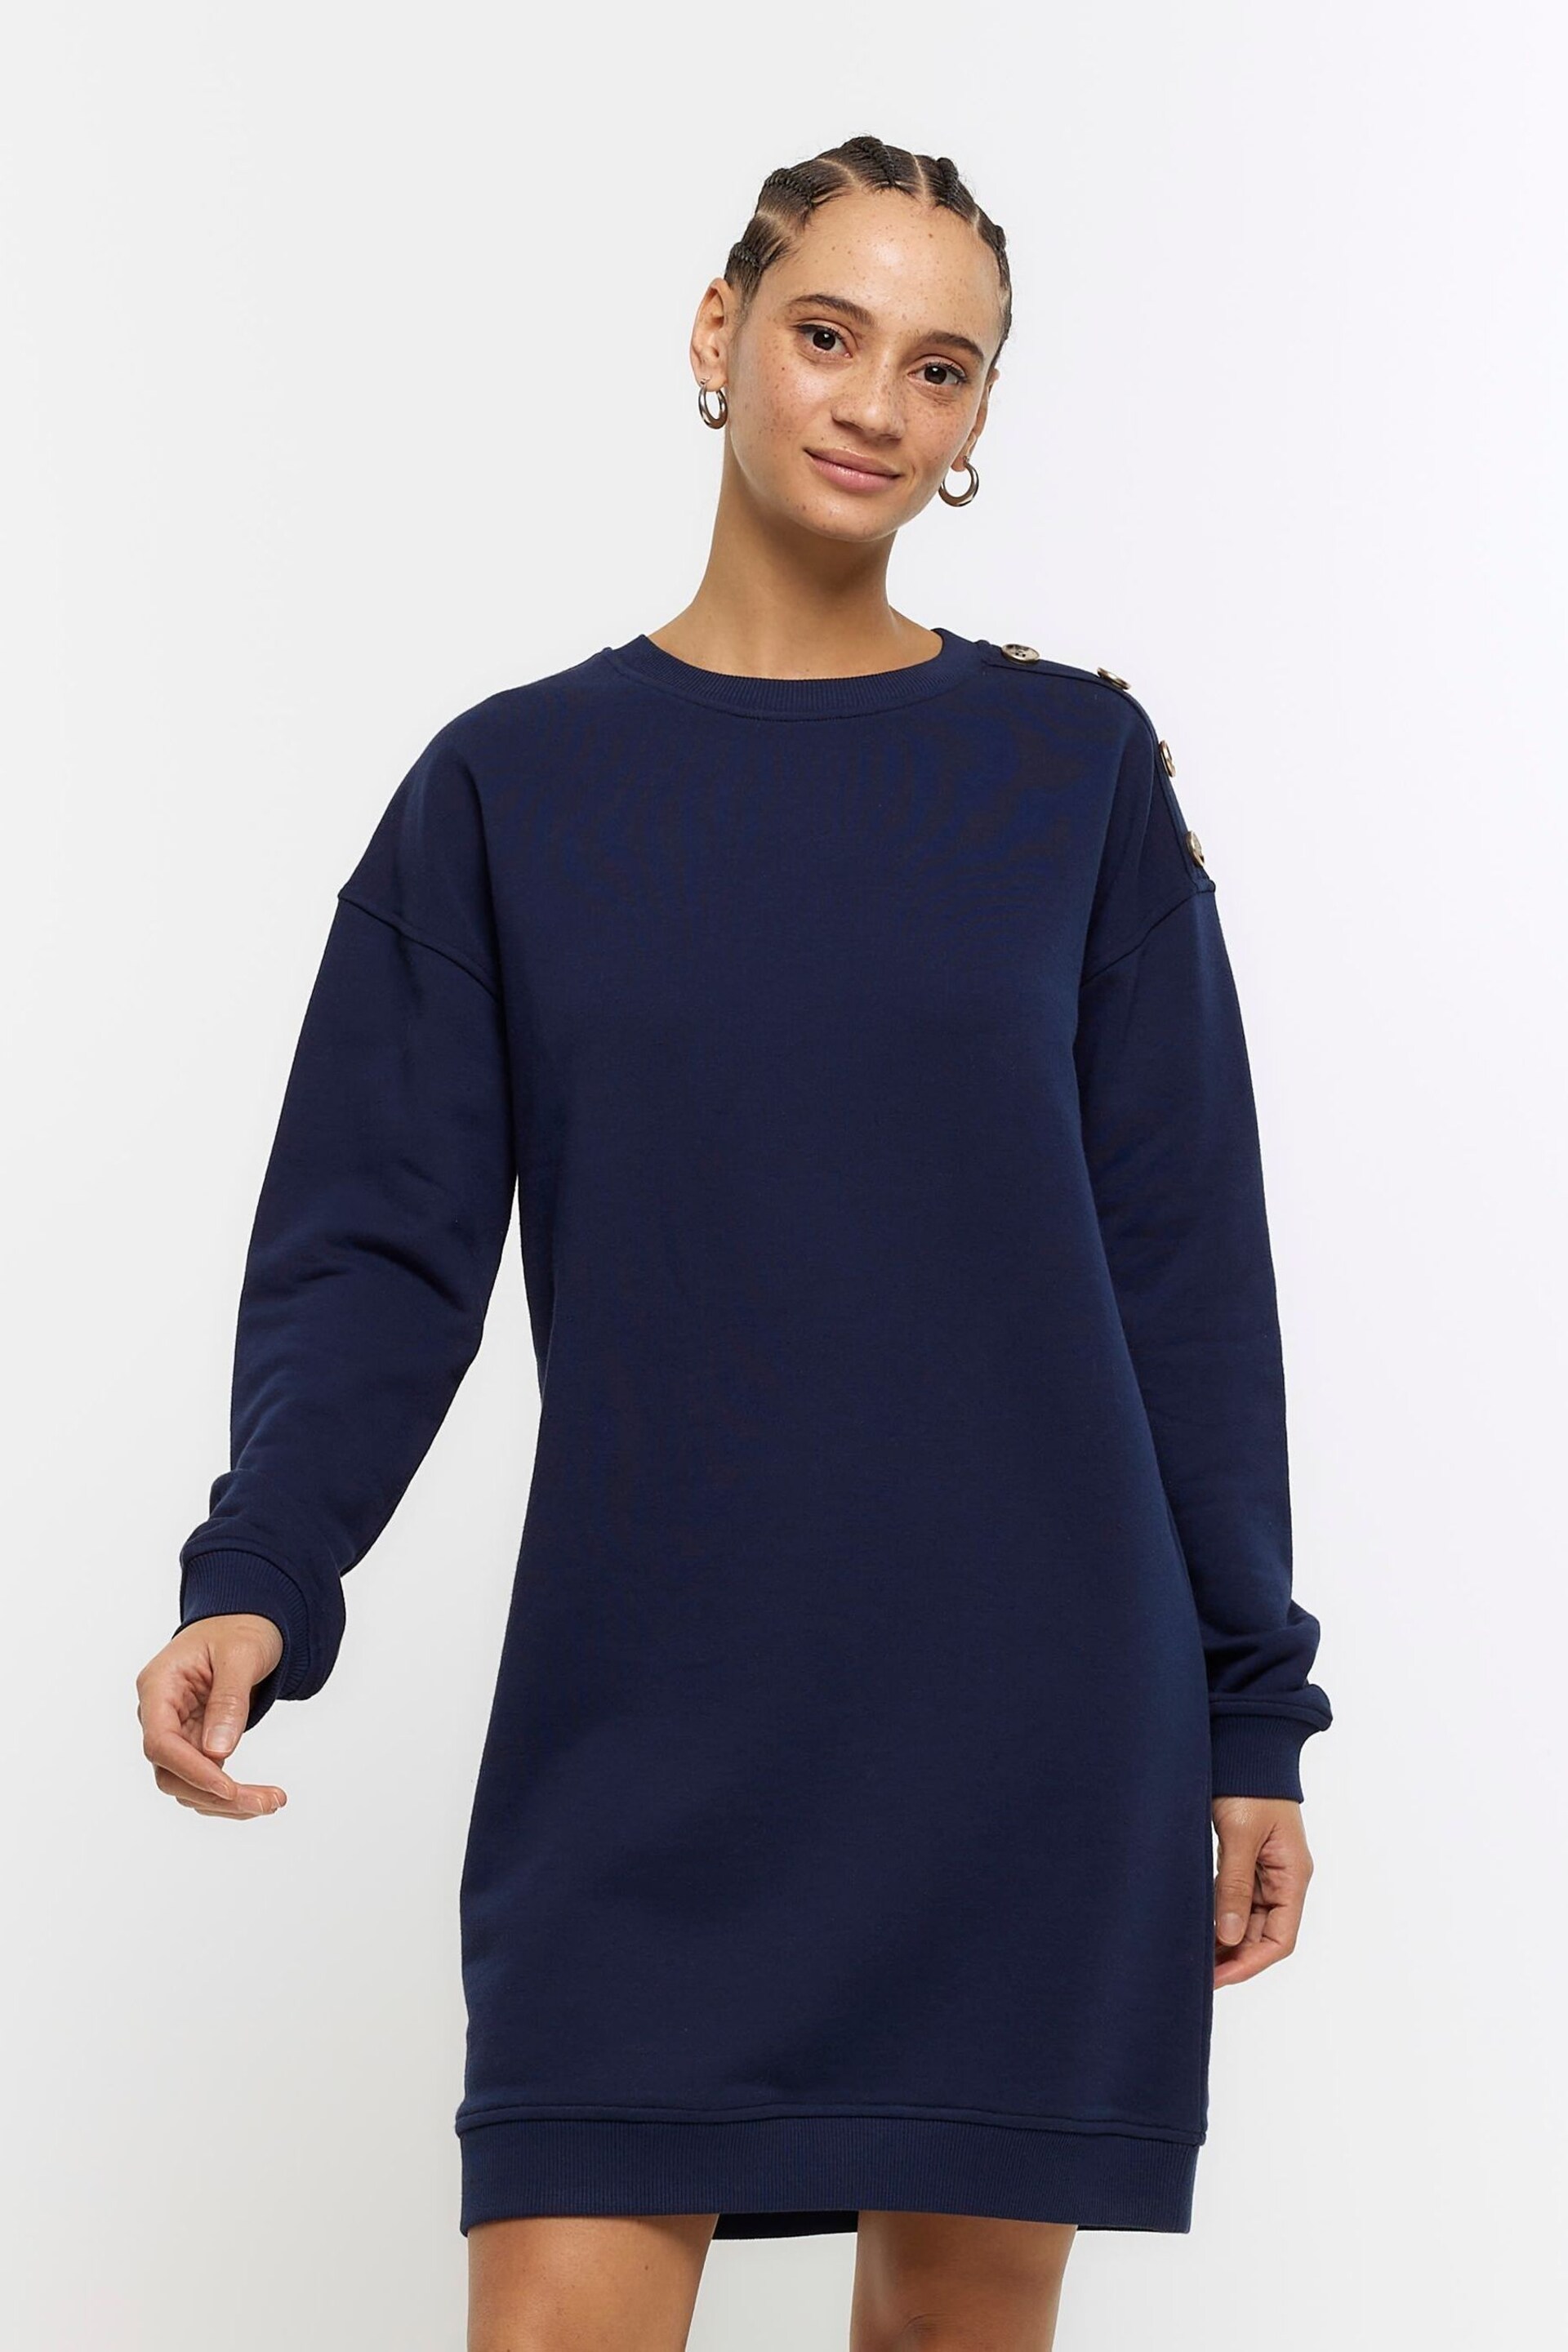 River Island Navy Button Detail Sweatshirt Mini Dress - Image 1 of 6